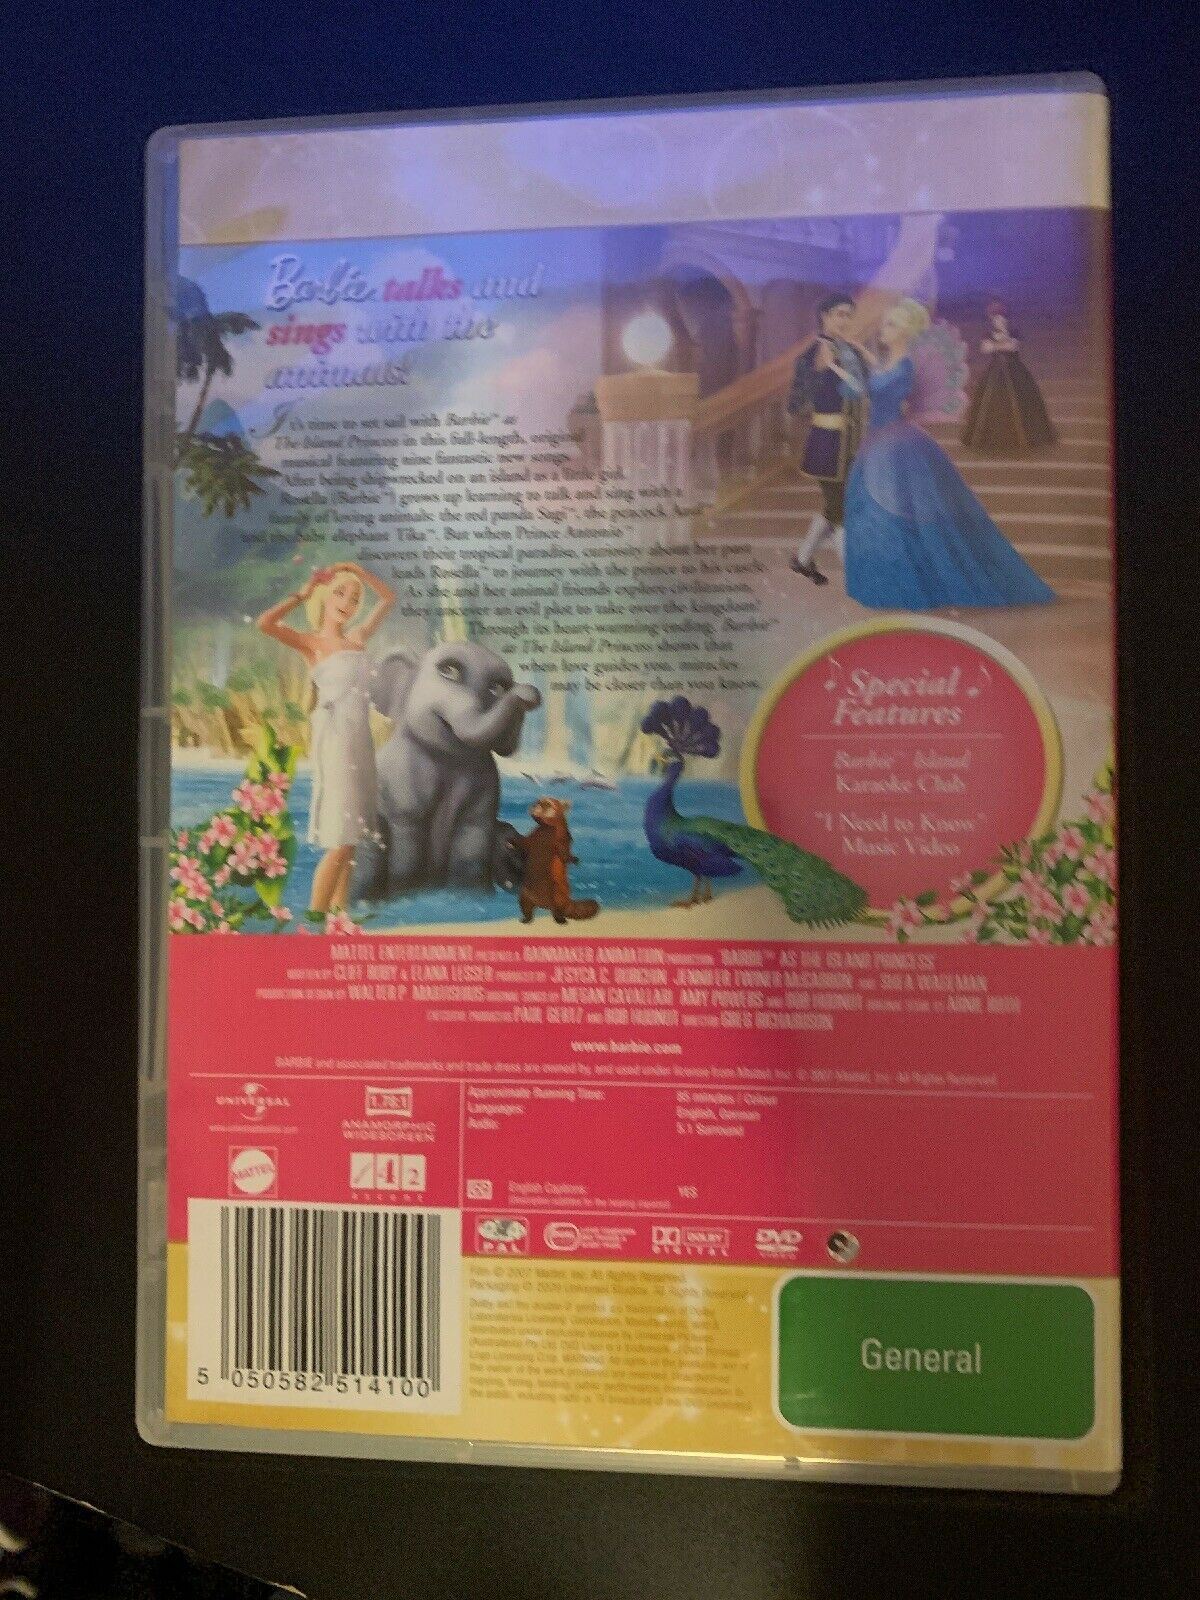 Barbie - The Island Princess (DVD) Region 4